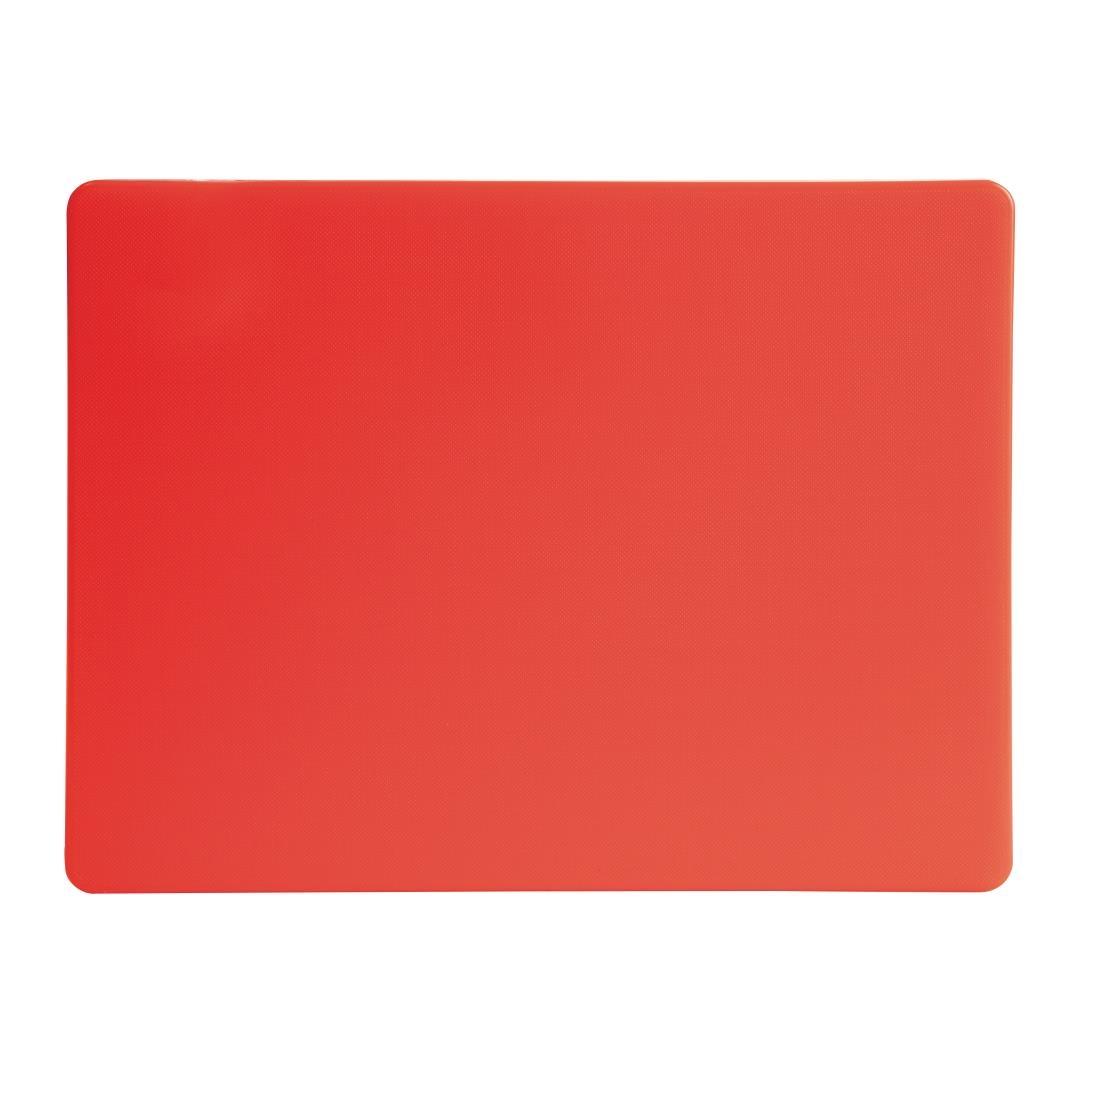 Hygiplas Low Density Red Chopping Board Small - GH794  - 3